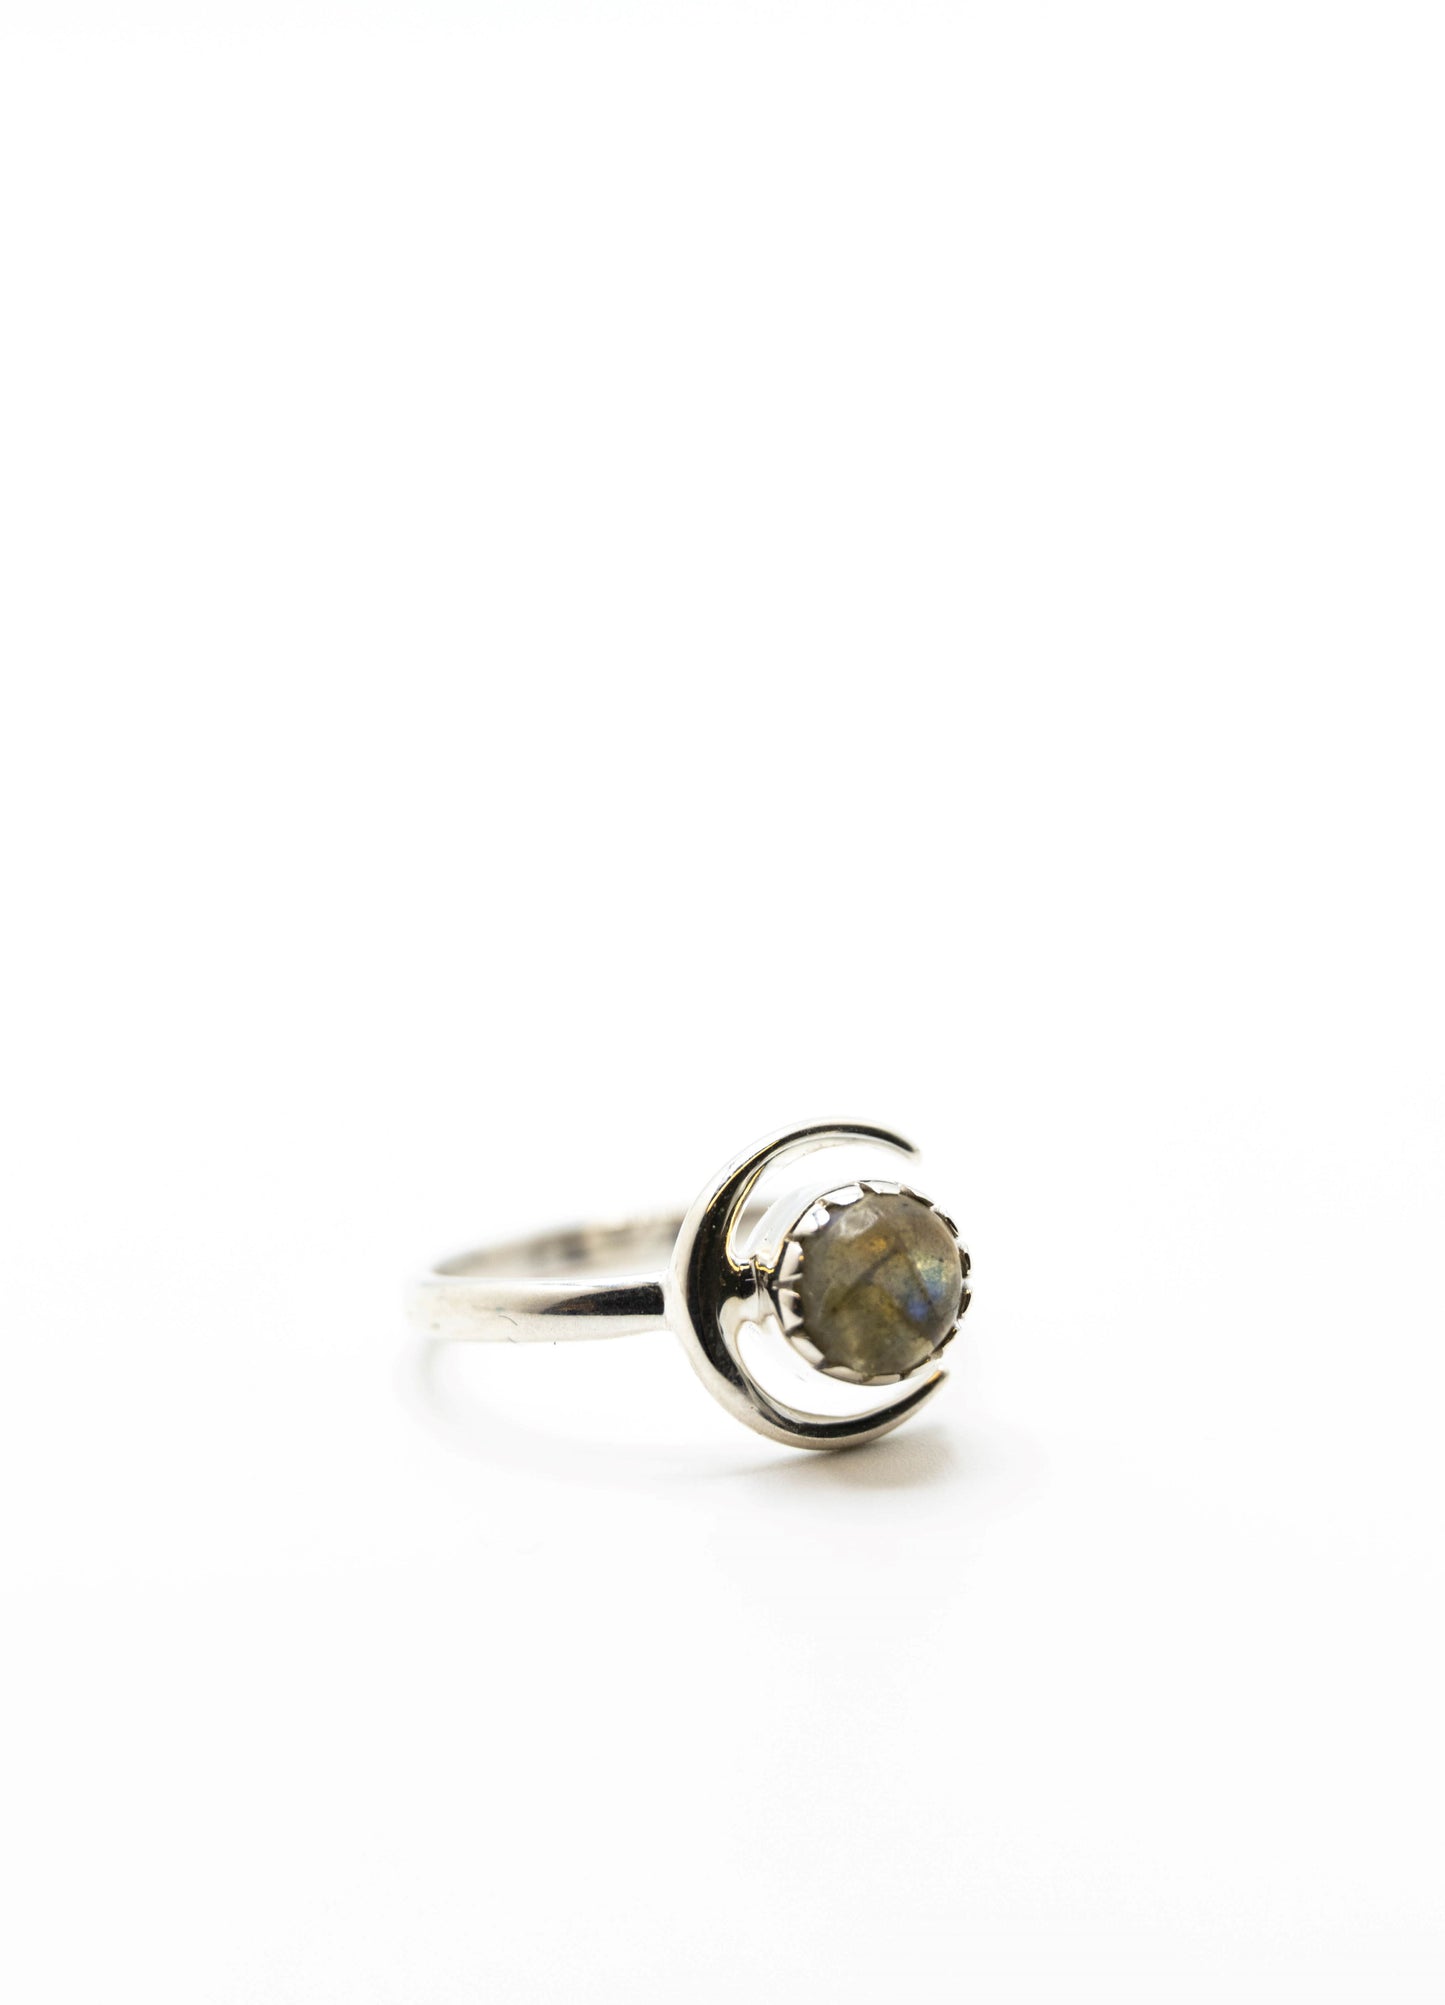 Labradorite Crystal Crescent Moon Ring .925